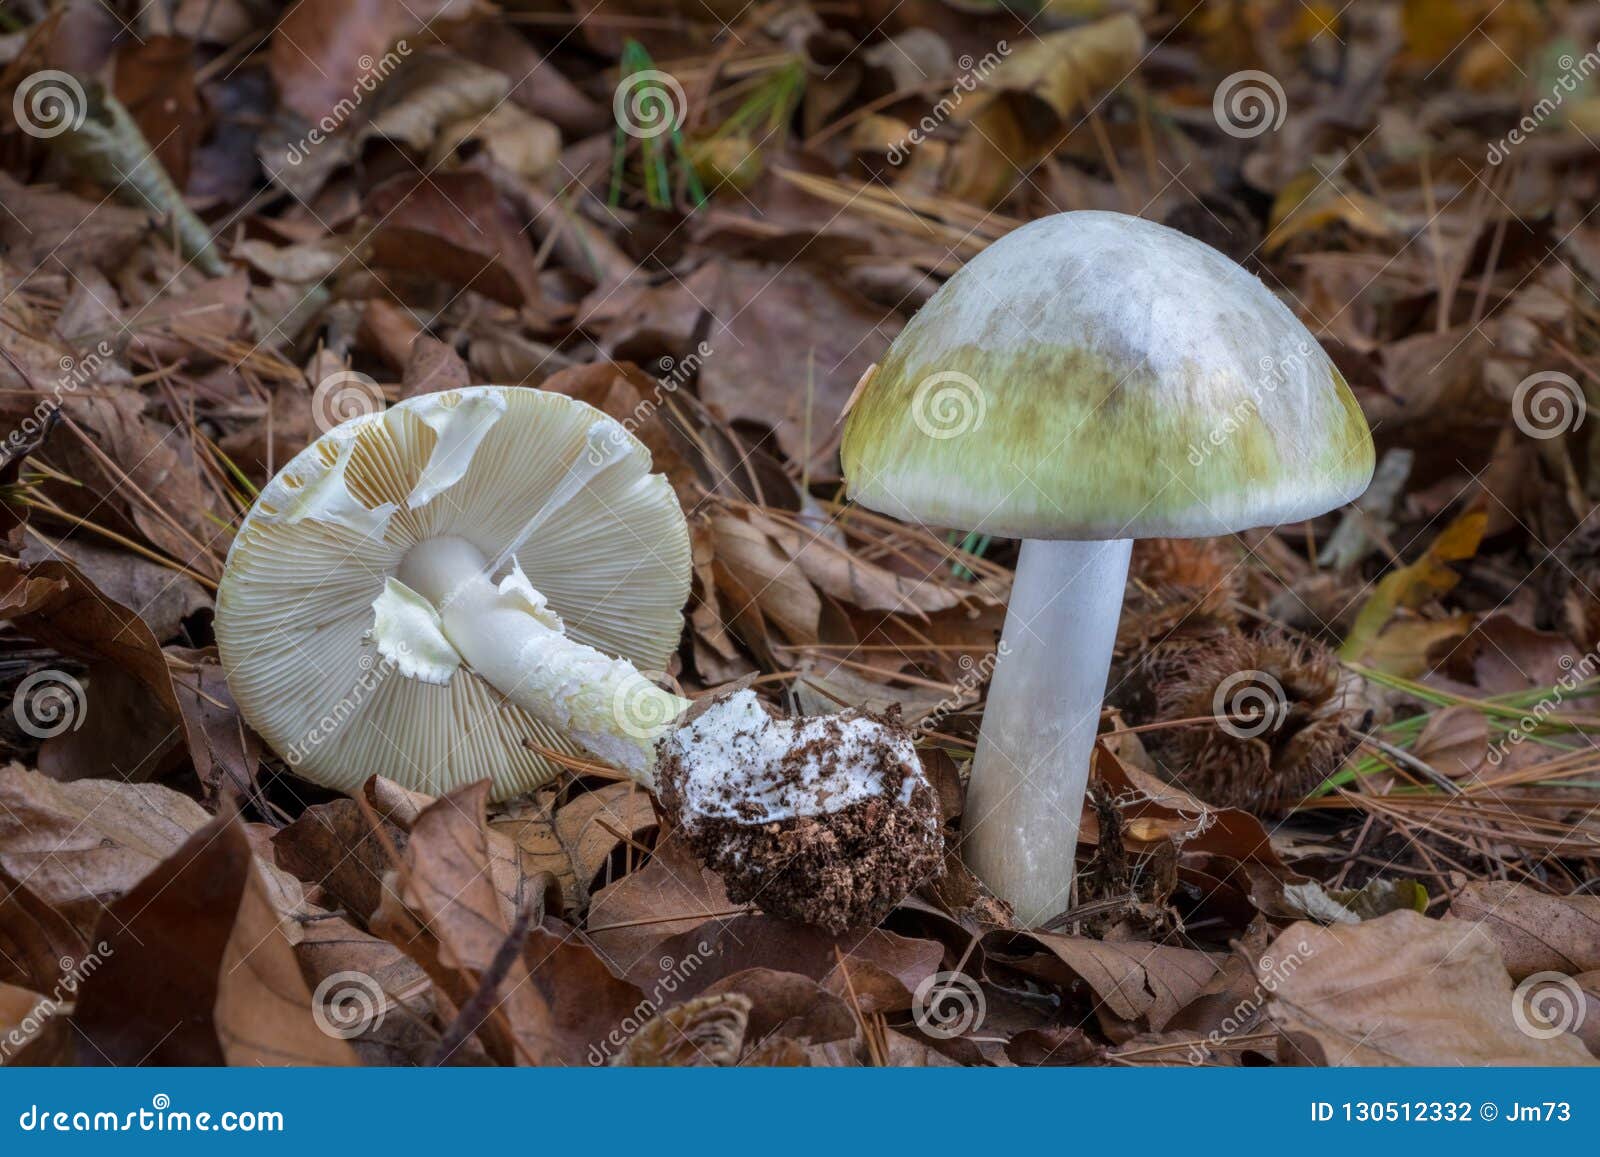 death cap - amanita phalloides - deadly poisonous mushroom